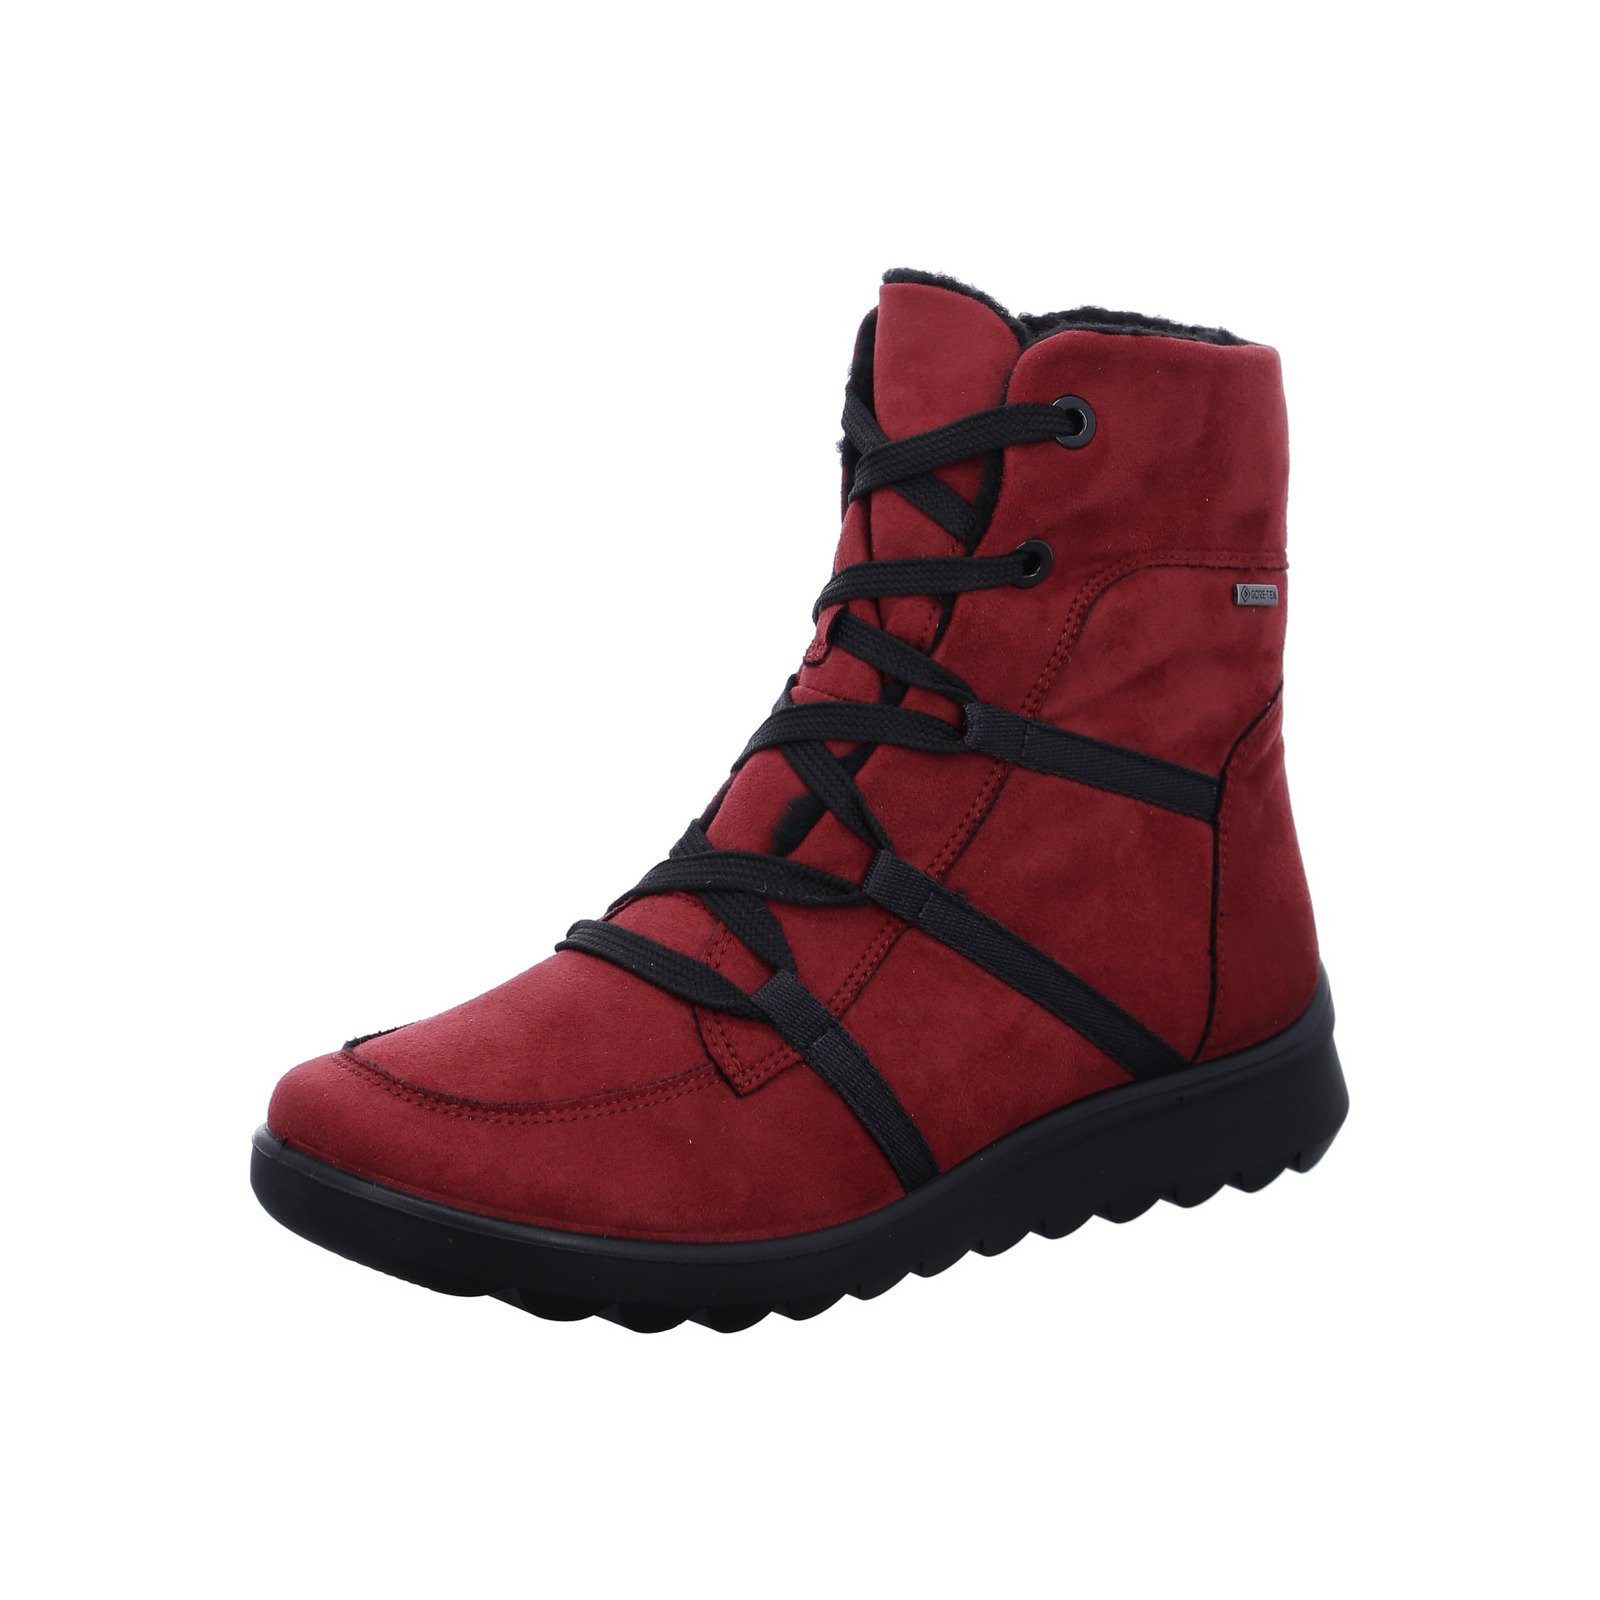 Ara Toronto - Damen Schuhe Stiefel Stiefel Textil rot